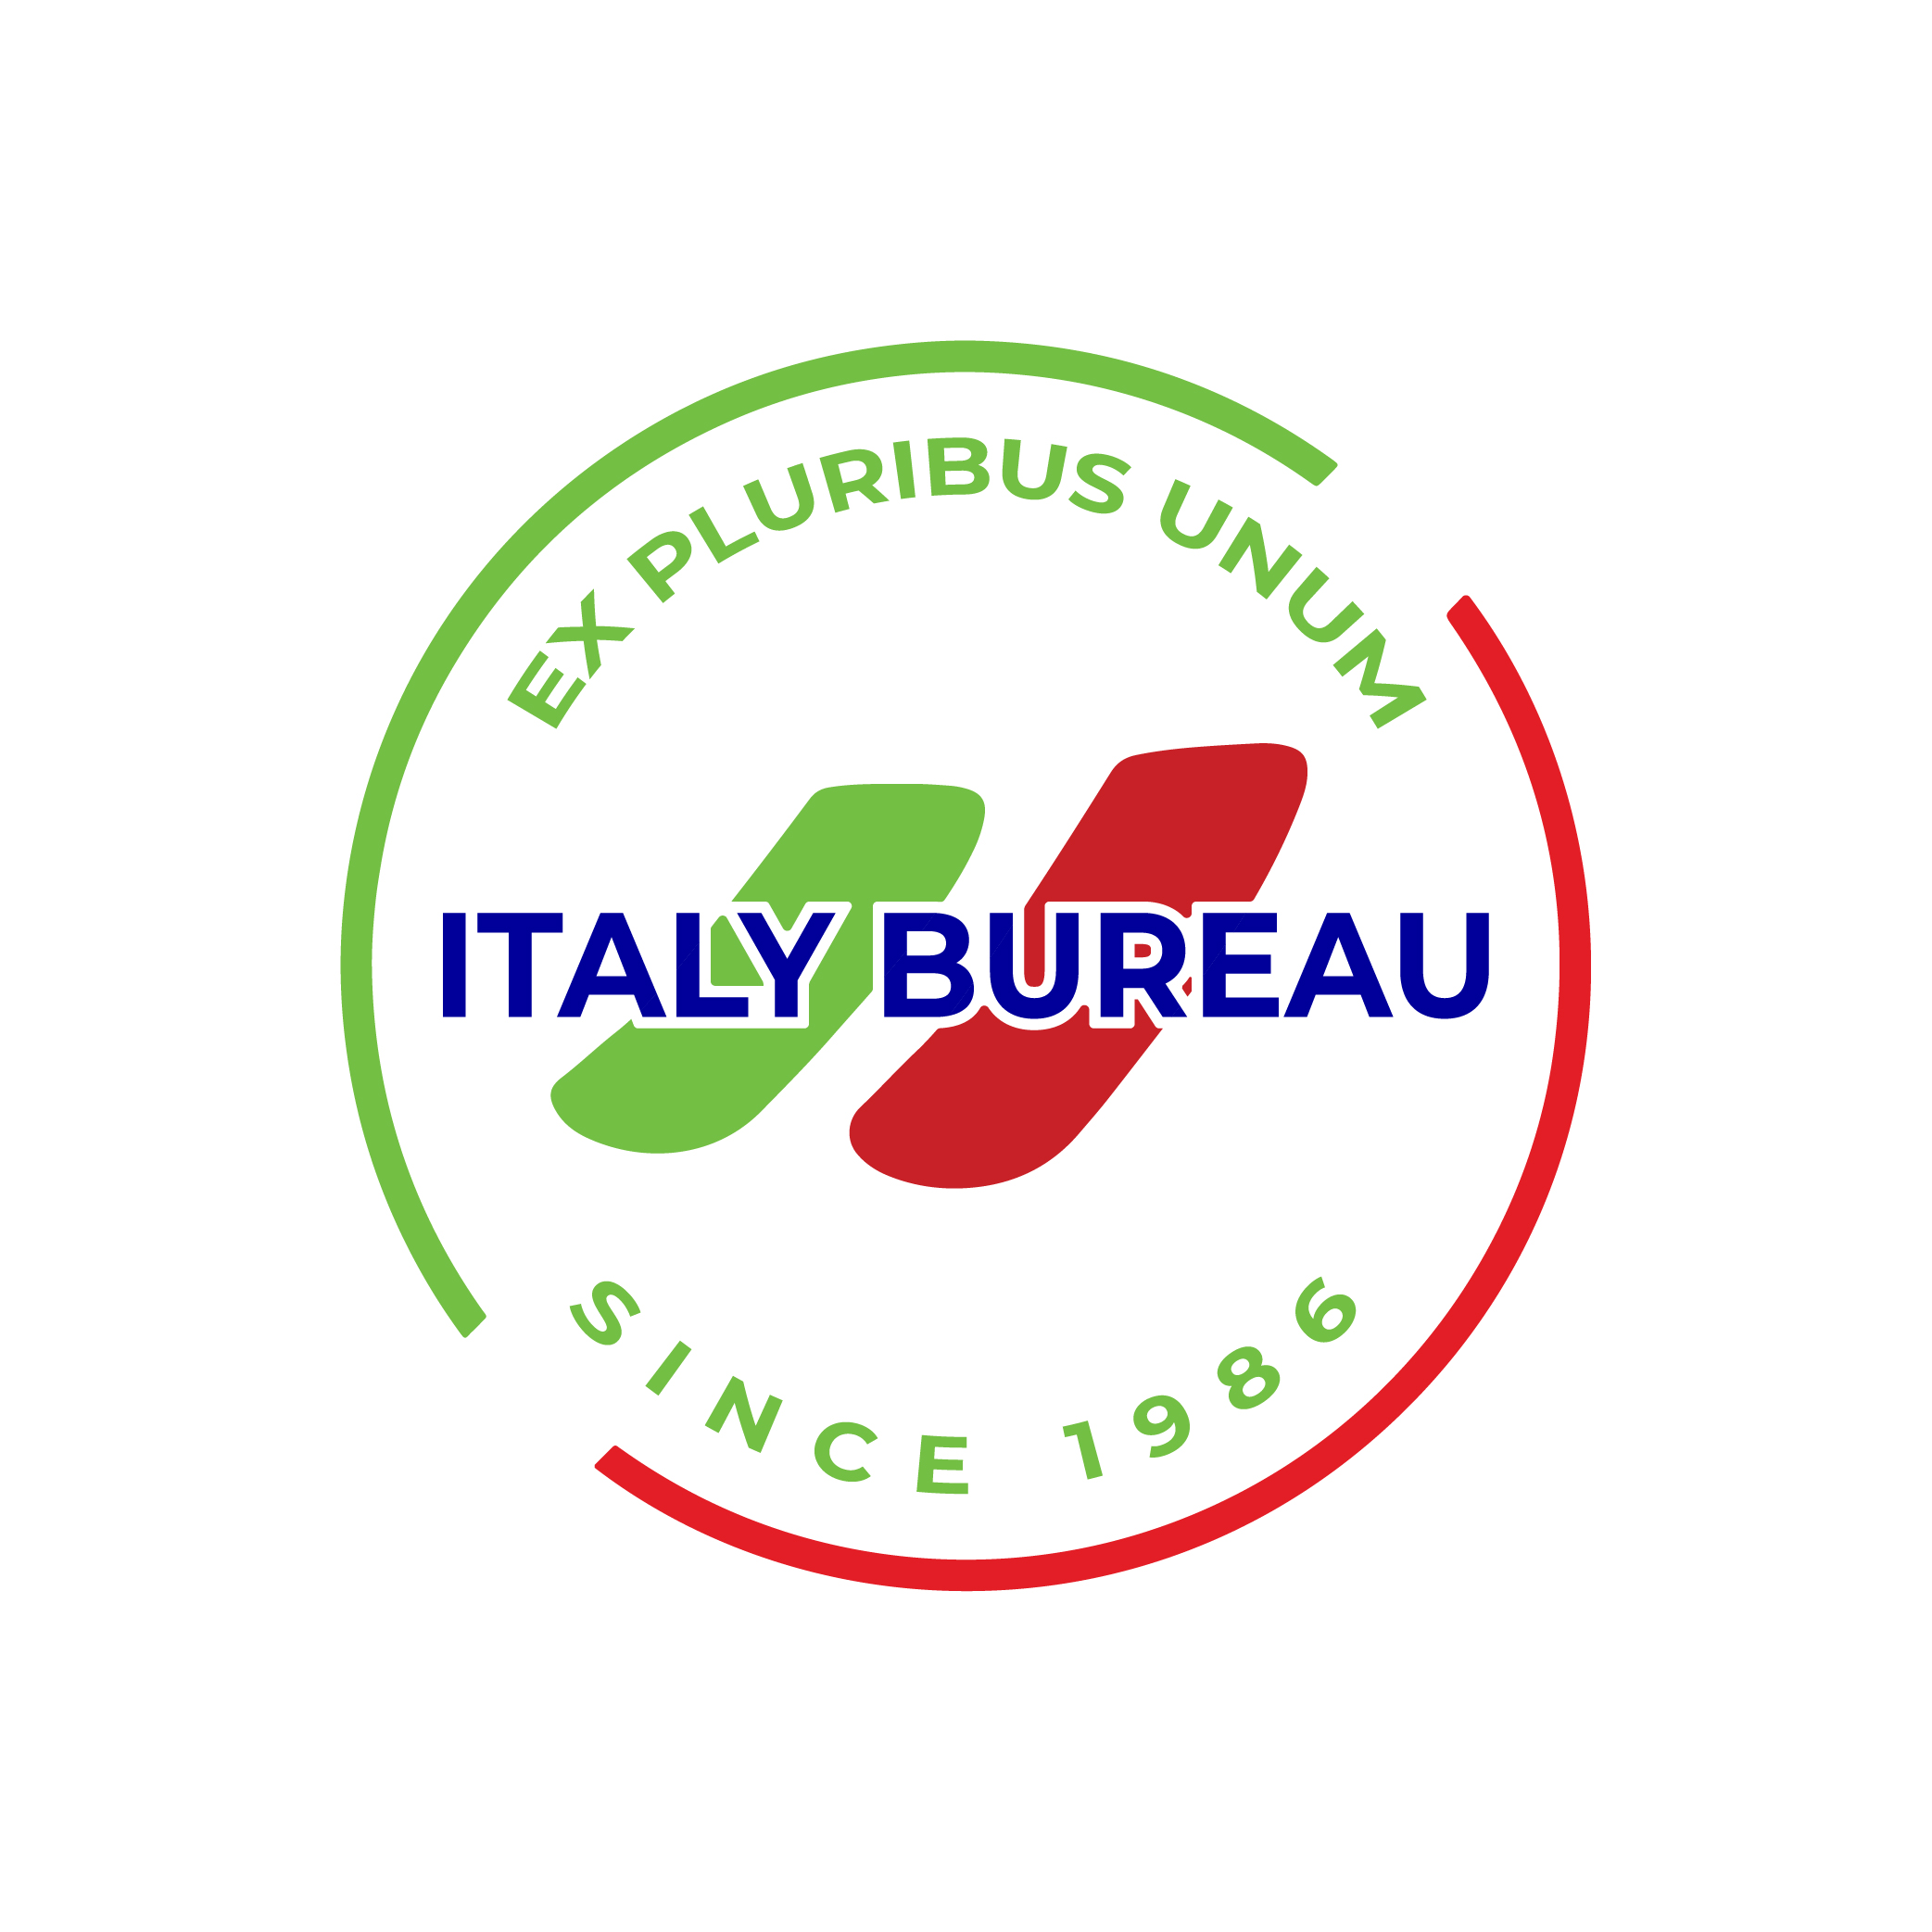 Italy Bureau alliance